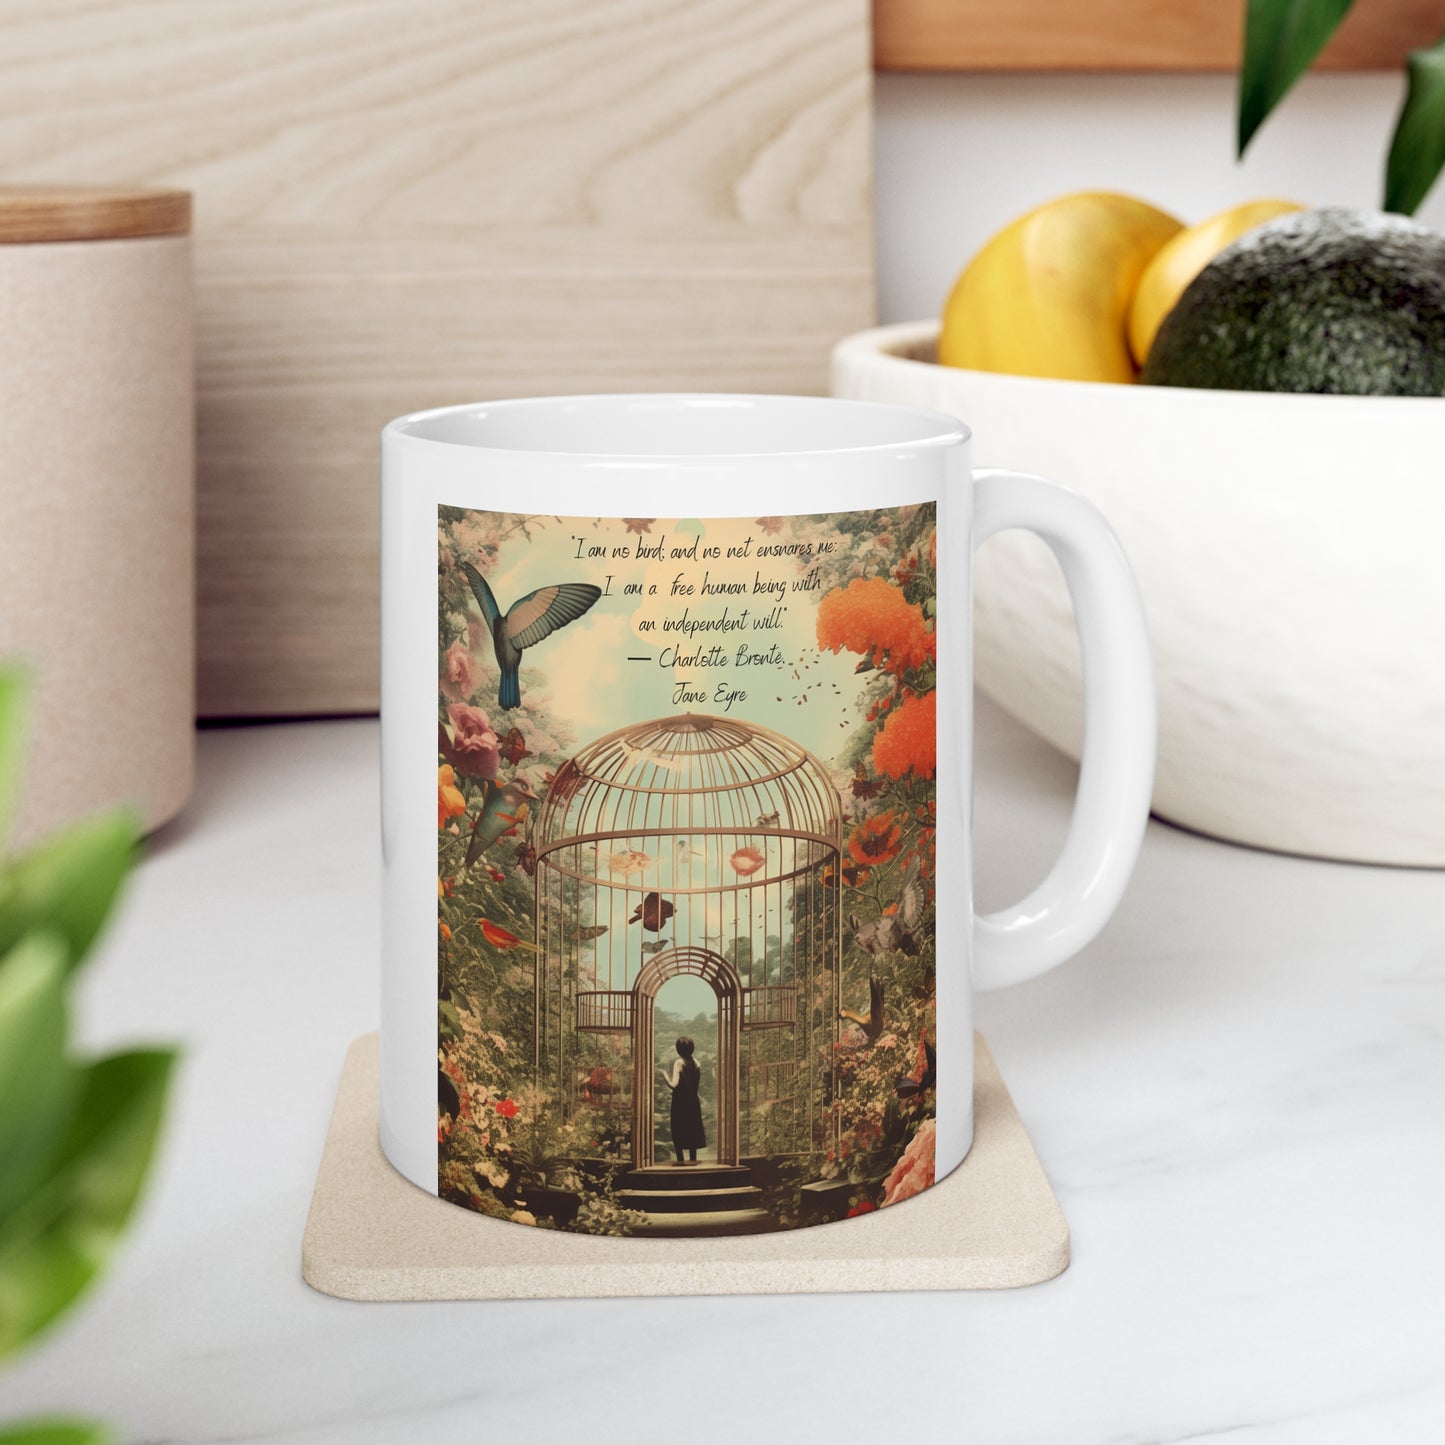 Freedom Spirit Ceramic Mug - Charlotte Bronte's Jane Eyre Inspiration.